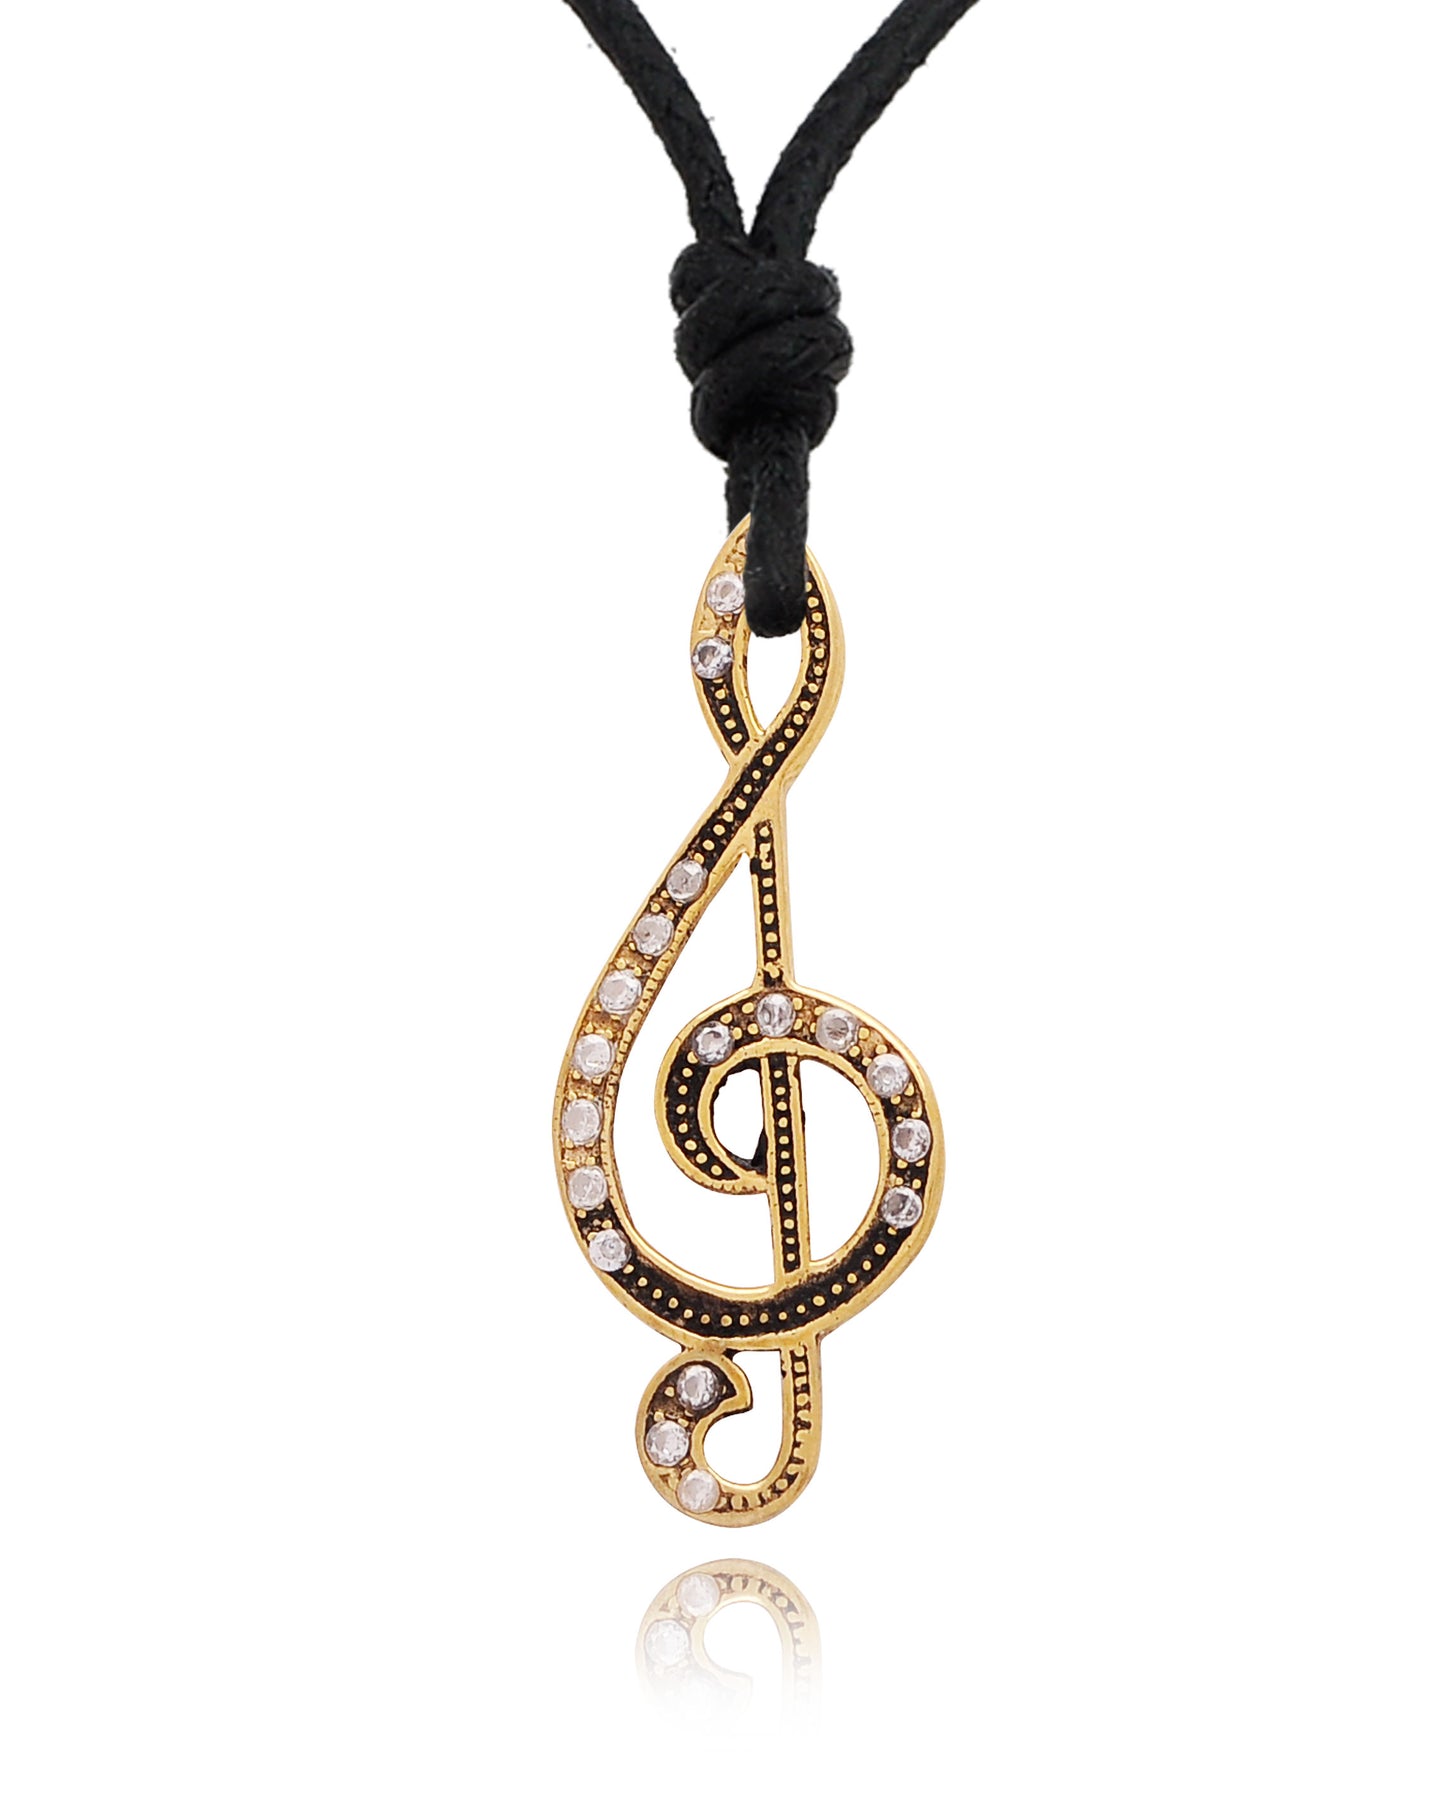 Music Note Handmade Brass Charm Necklace Pendant Jewelry